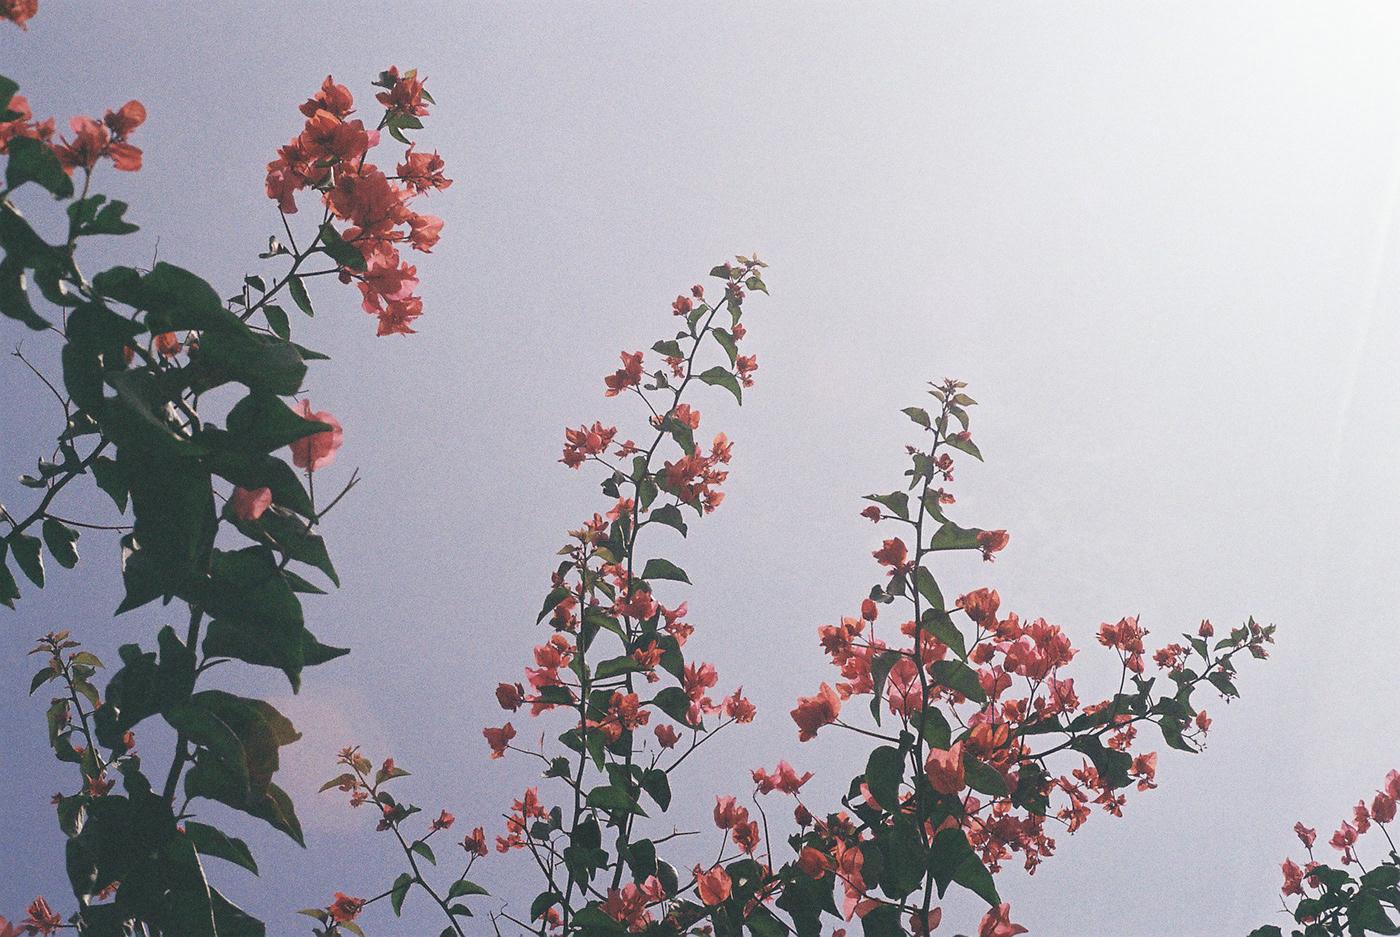 35mm analog Film   Flowers Nature